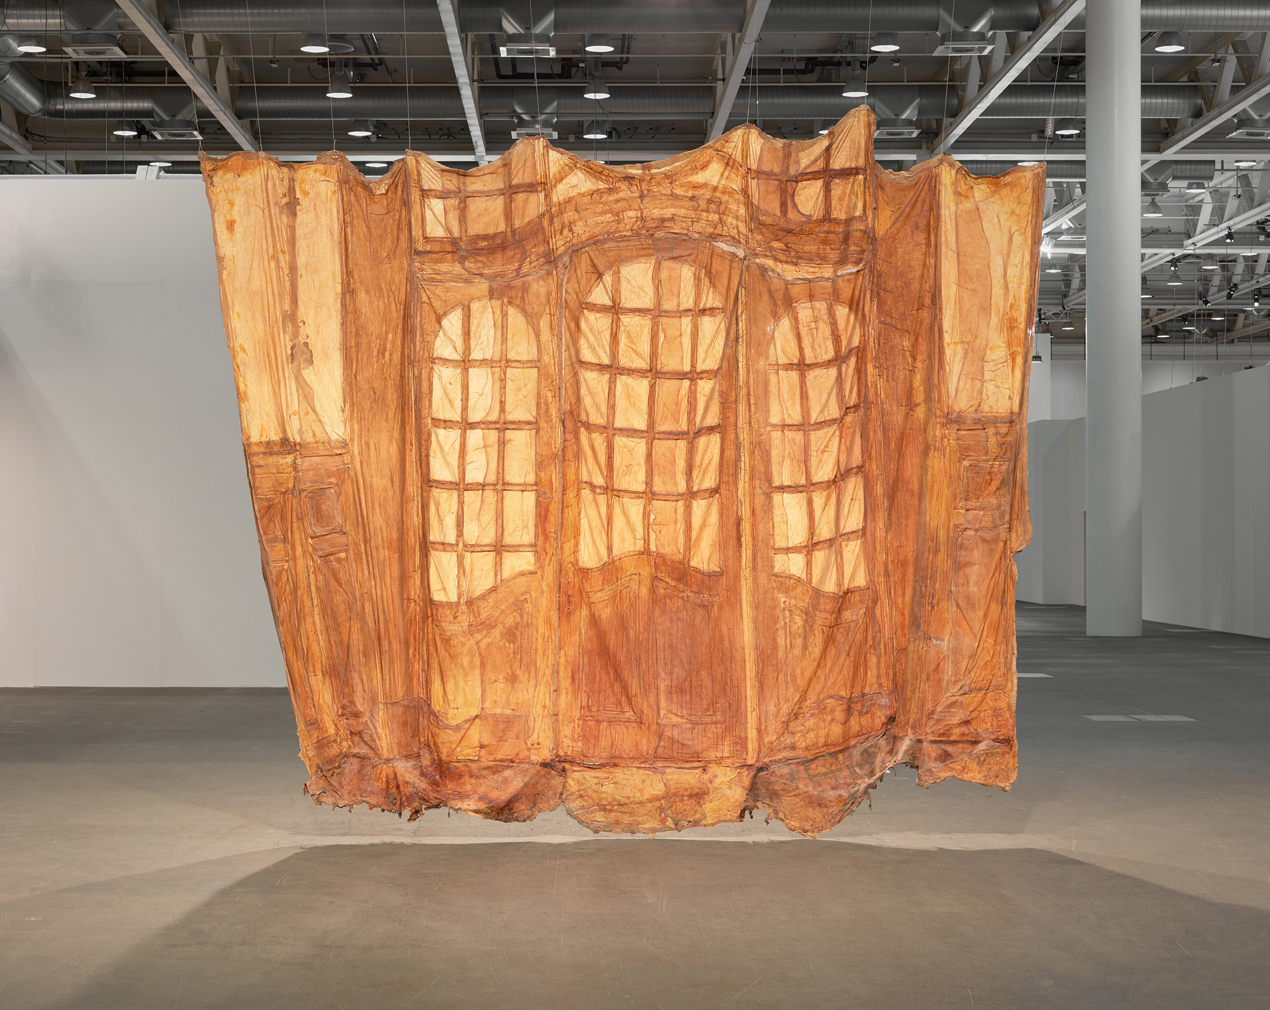 Heidi Bucher, 'Kleines Glasportal, Bellevue Kreuzlingen (Small glass portal, Bellevue Kreuzlingen;), 1988. Installation views at Art Basel Unlimited, 2016. Photography: Robert Glowacki, courtesy The Approach, London